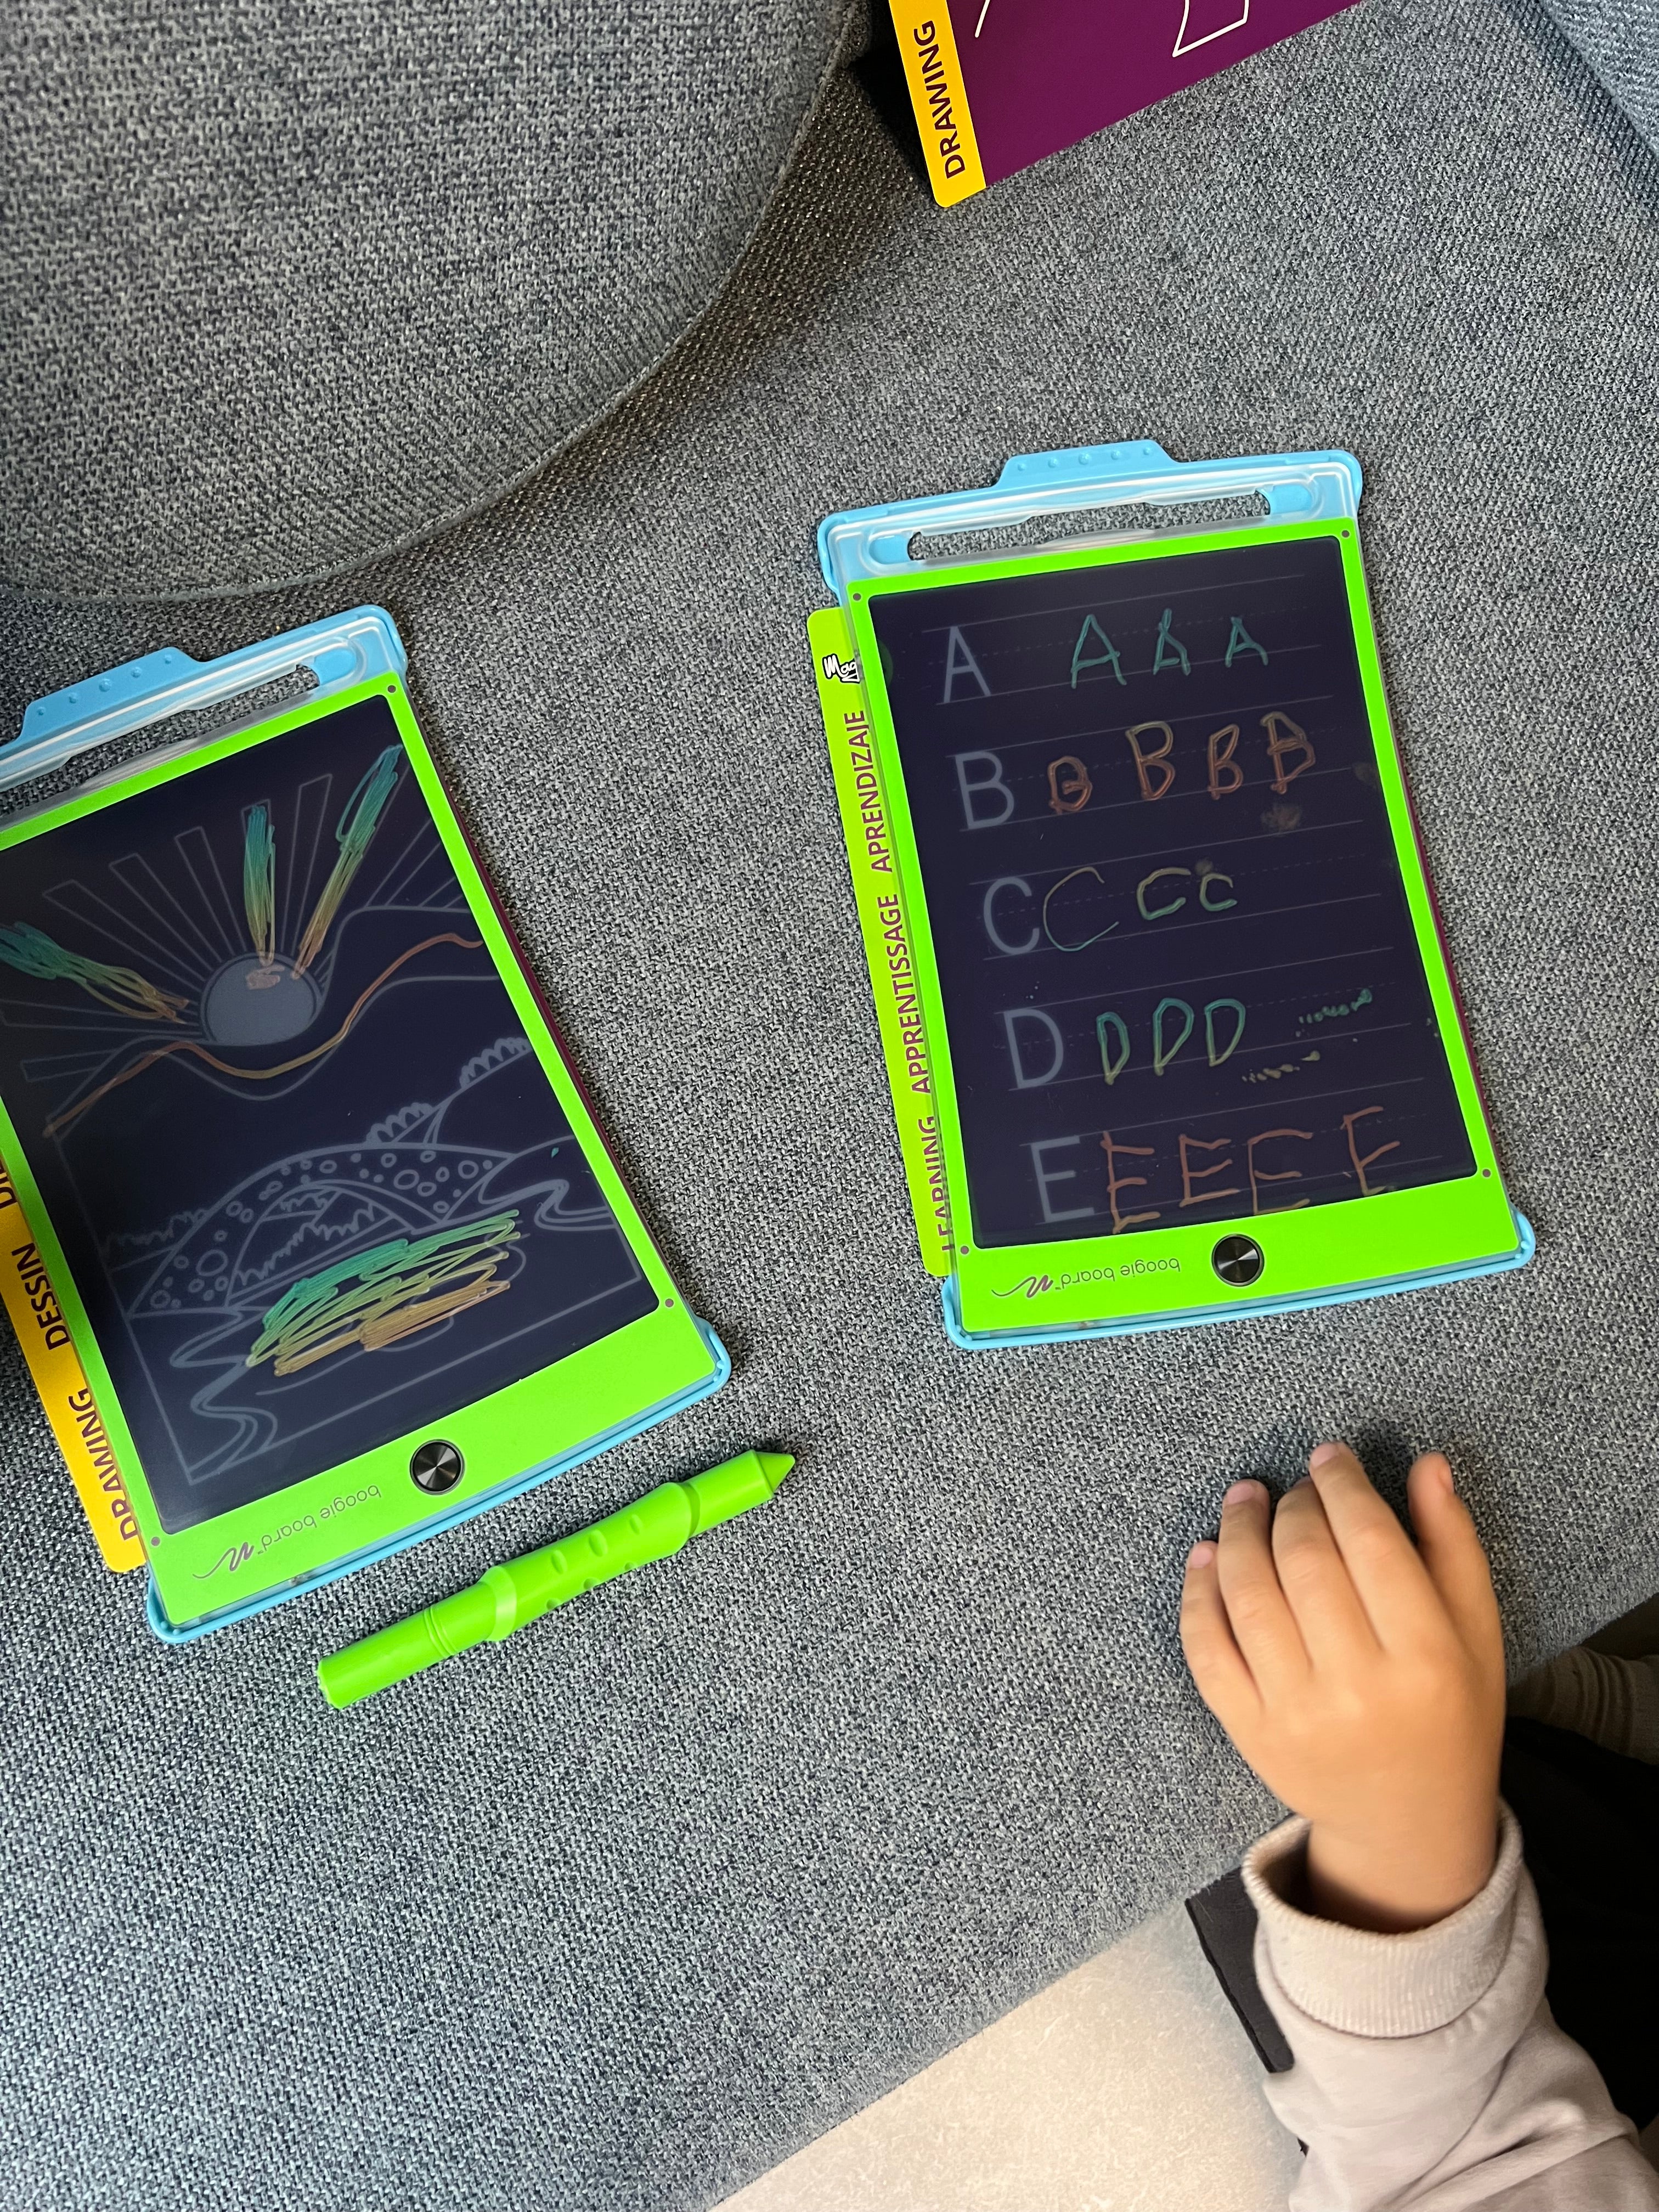 Magic Sketch™ Kids Drawing Kit – Luna Electronics